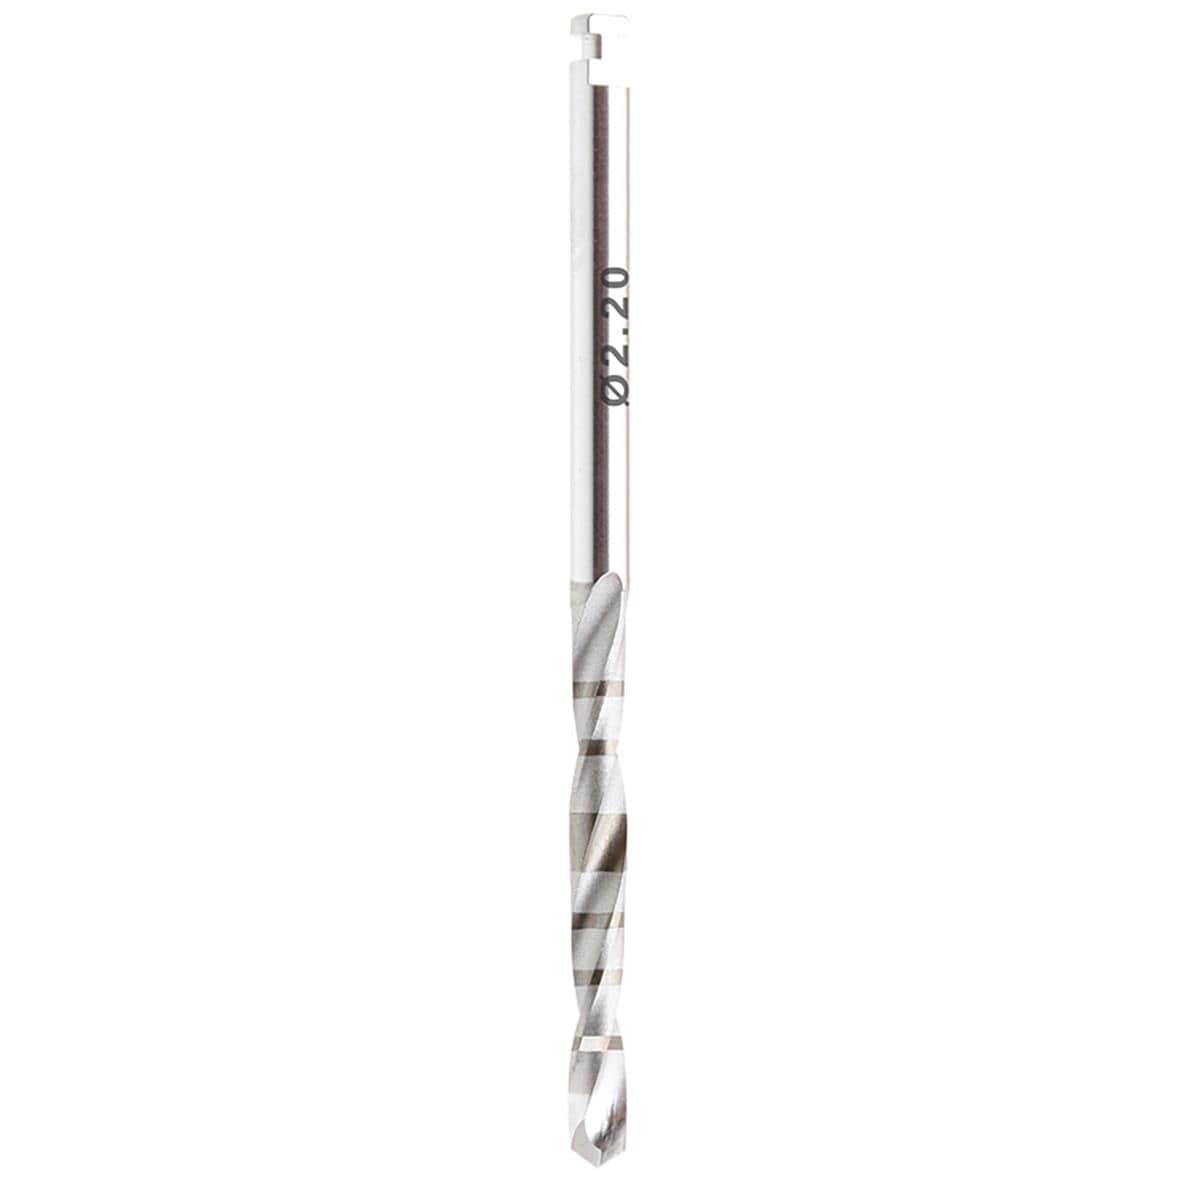 OKTAGON® Tissue Level Bone Level Twist Drill Diameter 2.2mm Length 41.0mm Long